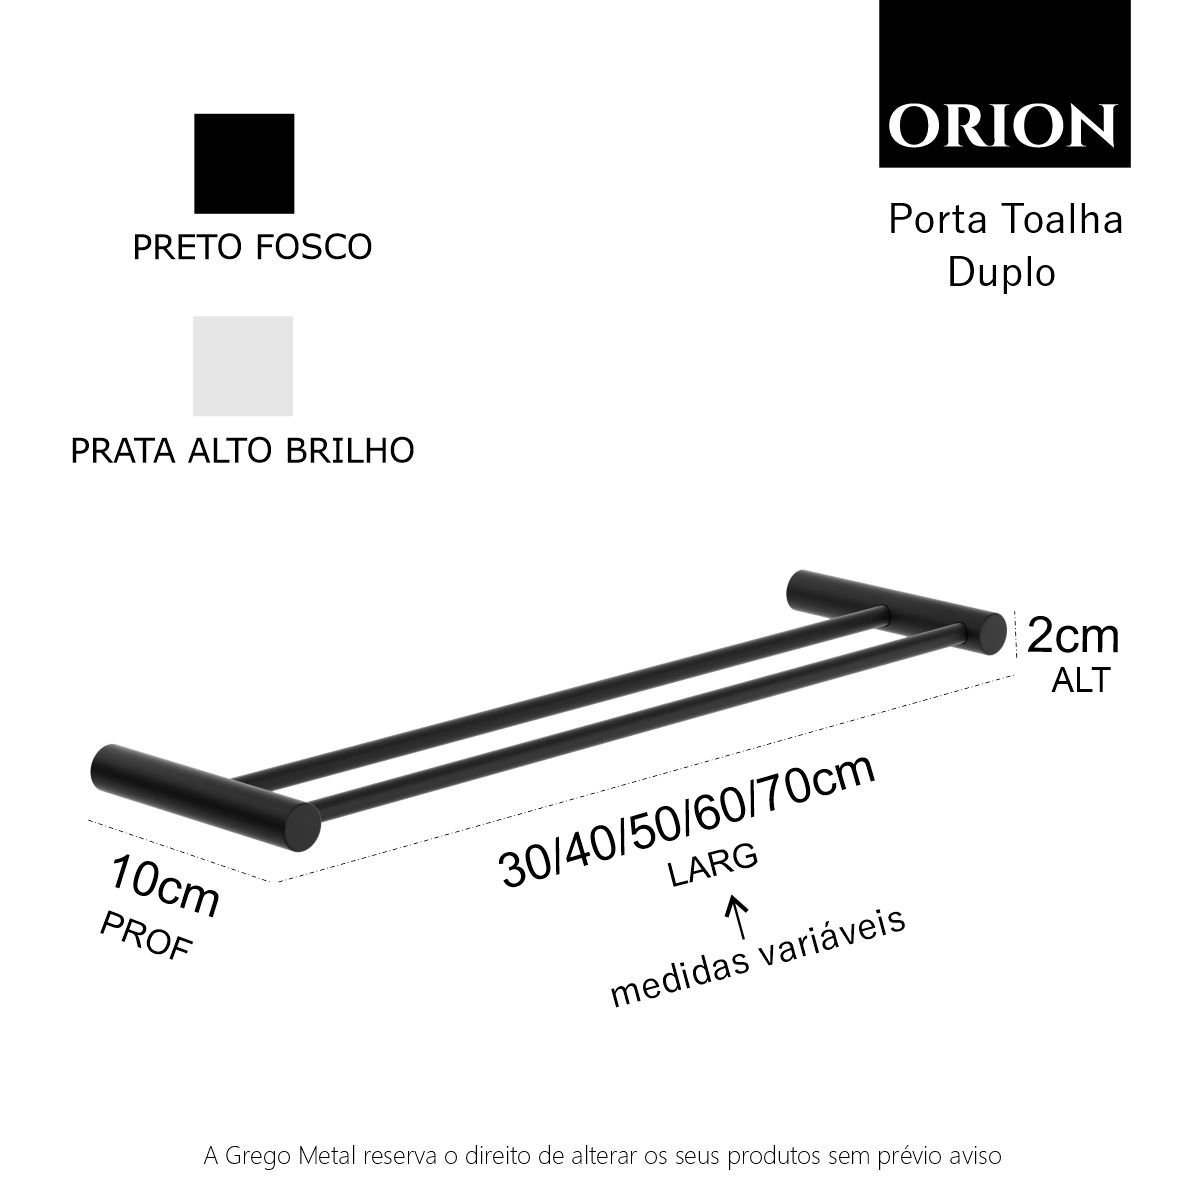 Porta Toalha Duplo para Banheiro Toalheiro 40cm Suporte Redondo Barra Grego Metal Preto Fosco Orion - 5